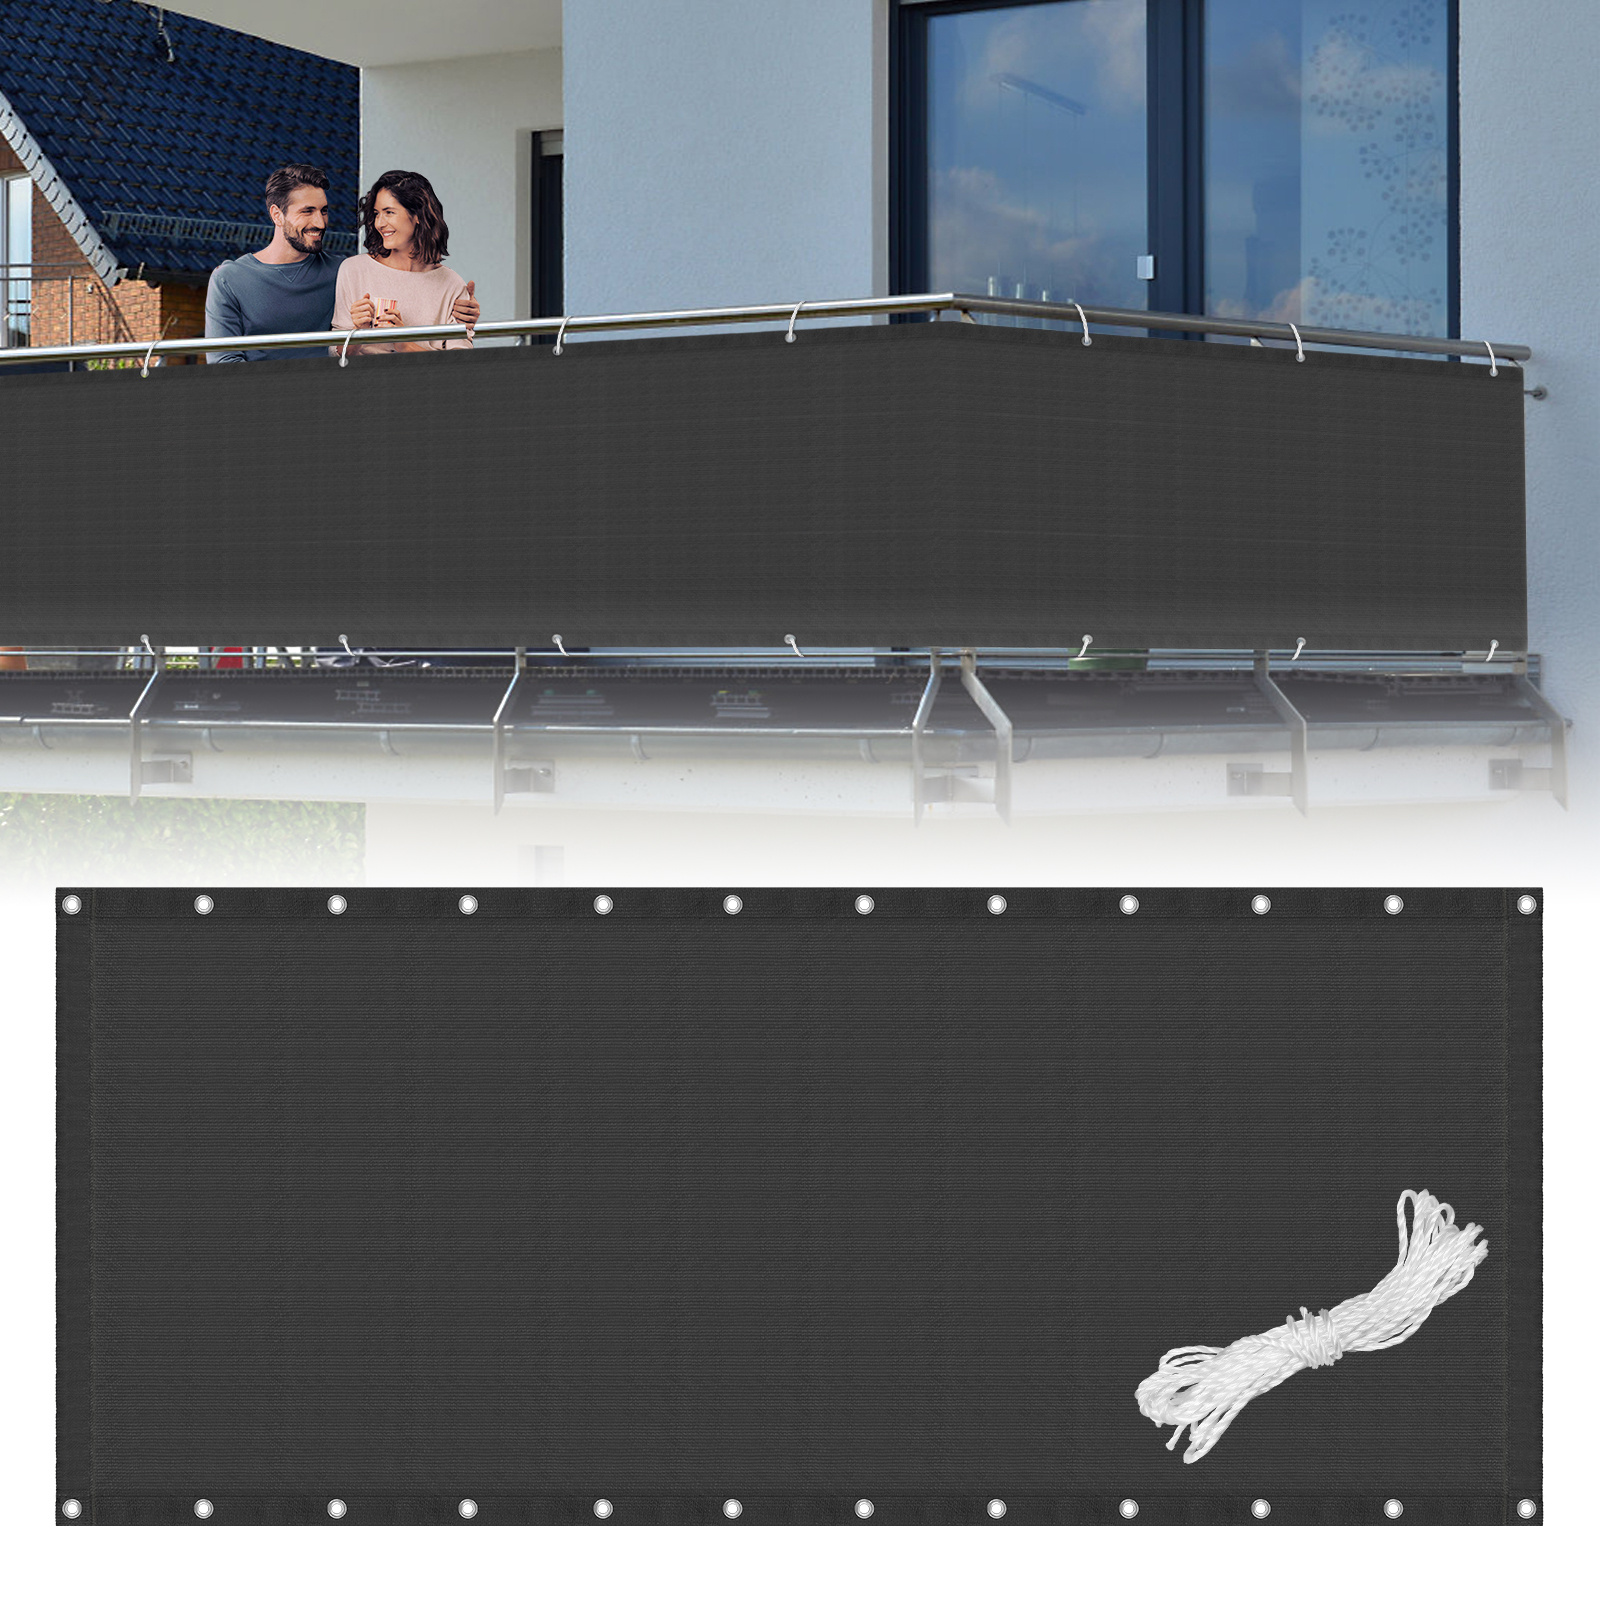 6x0,9m Balkonverkleidung Sichschutz Balkonbespannung Anthrazit Windschutz Balkon 